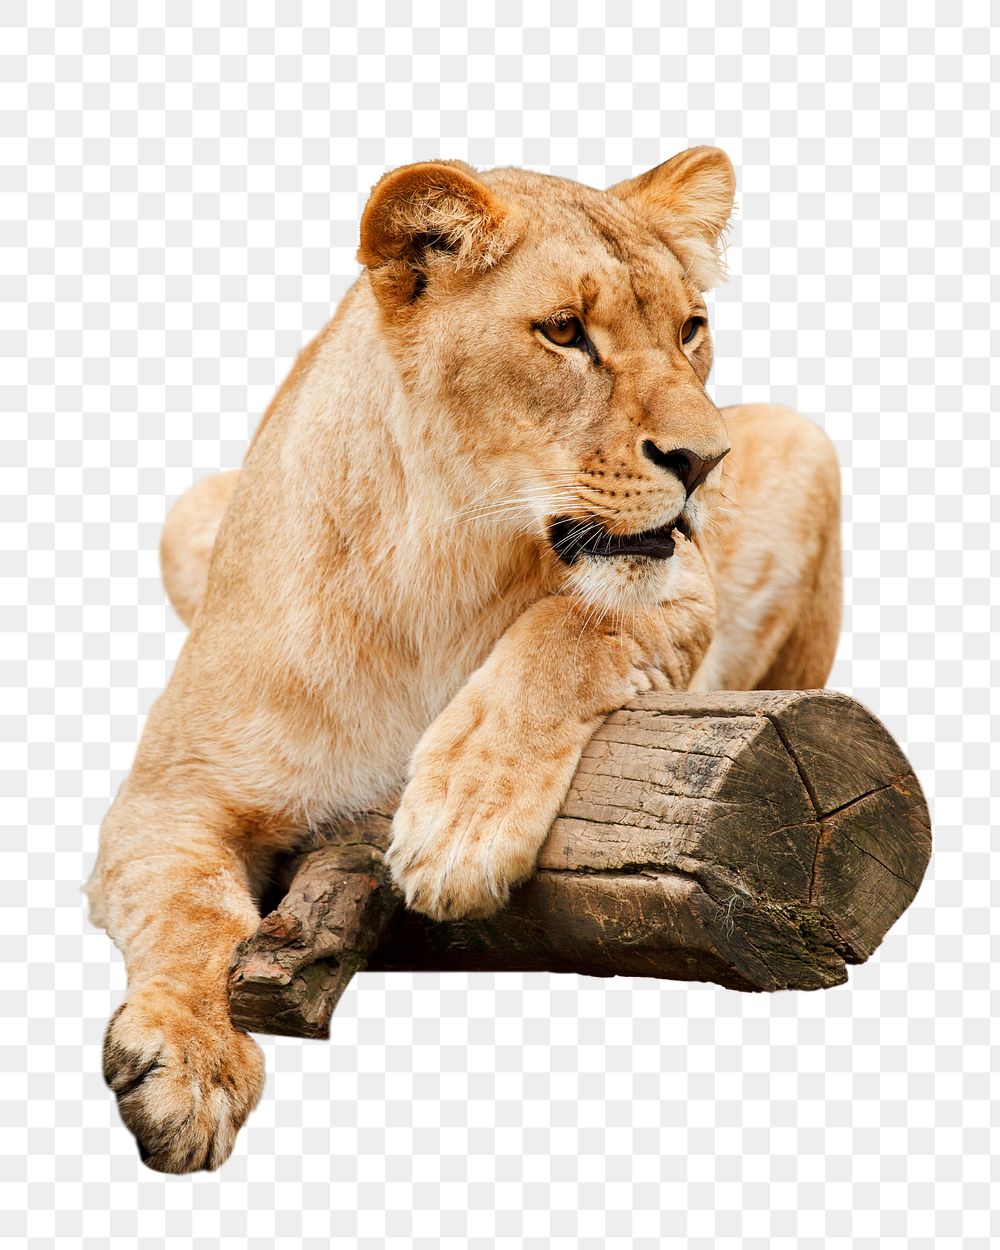 Female lion png sticker, animal image, transparent background